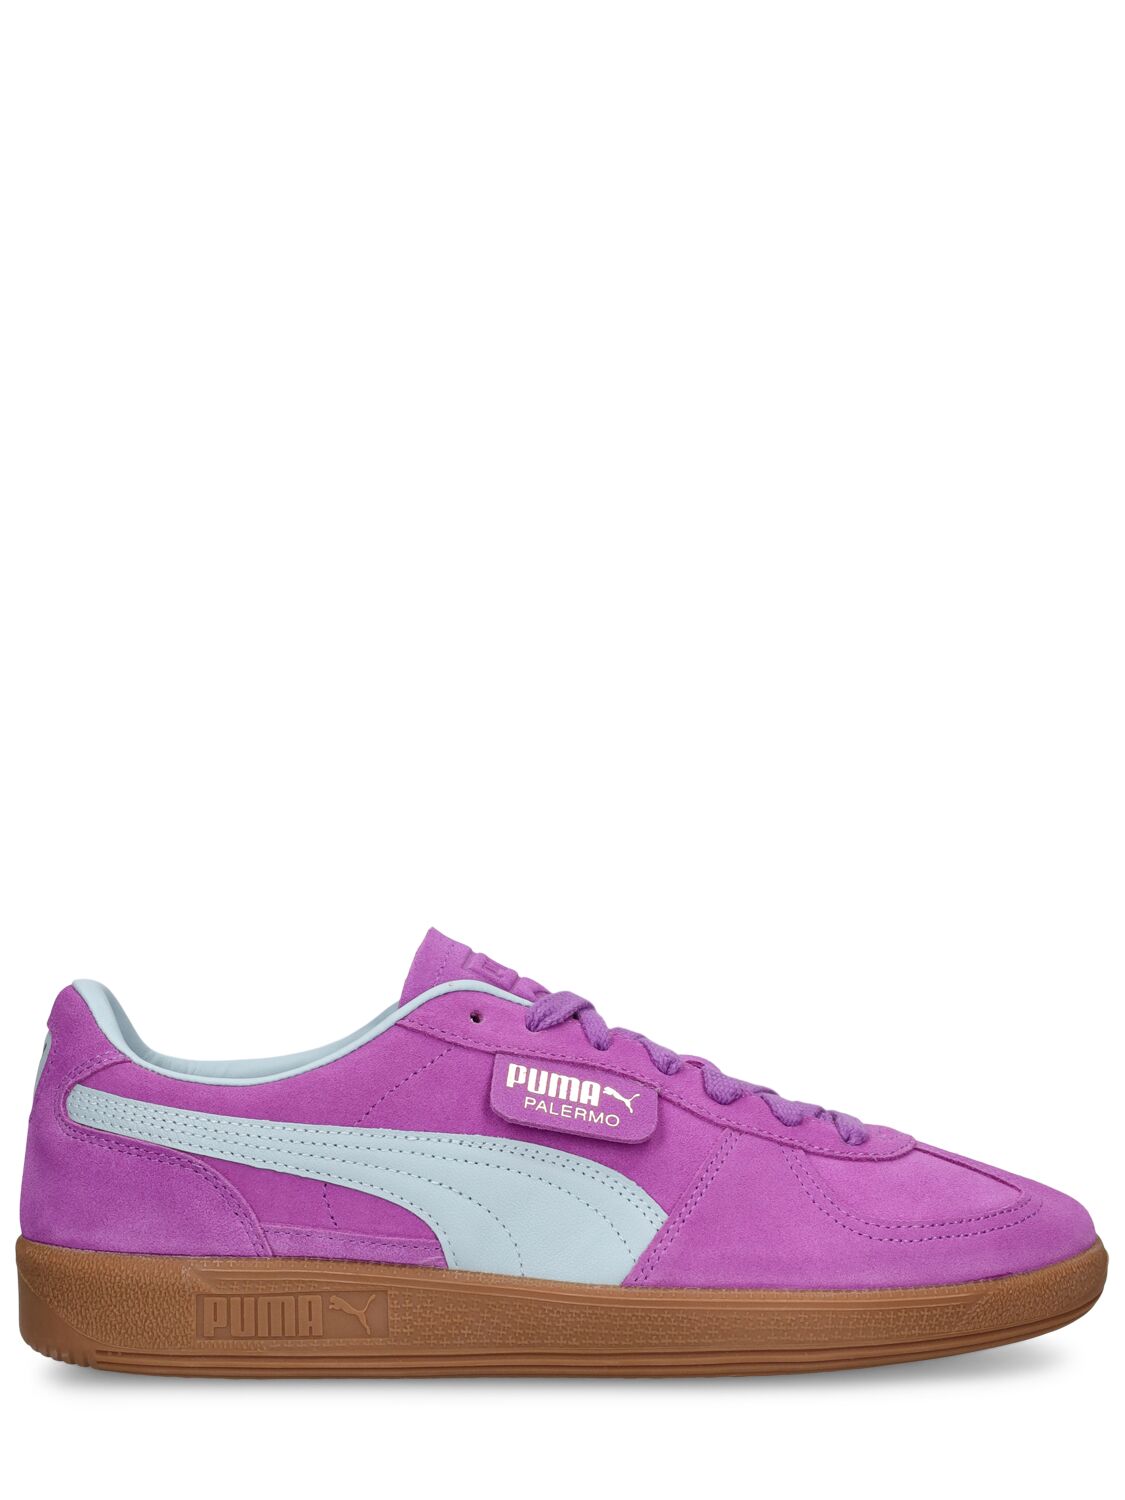 Puma Palermo Sneakers In Purple,orange